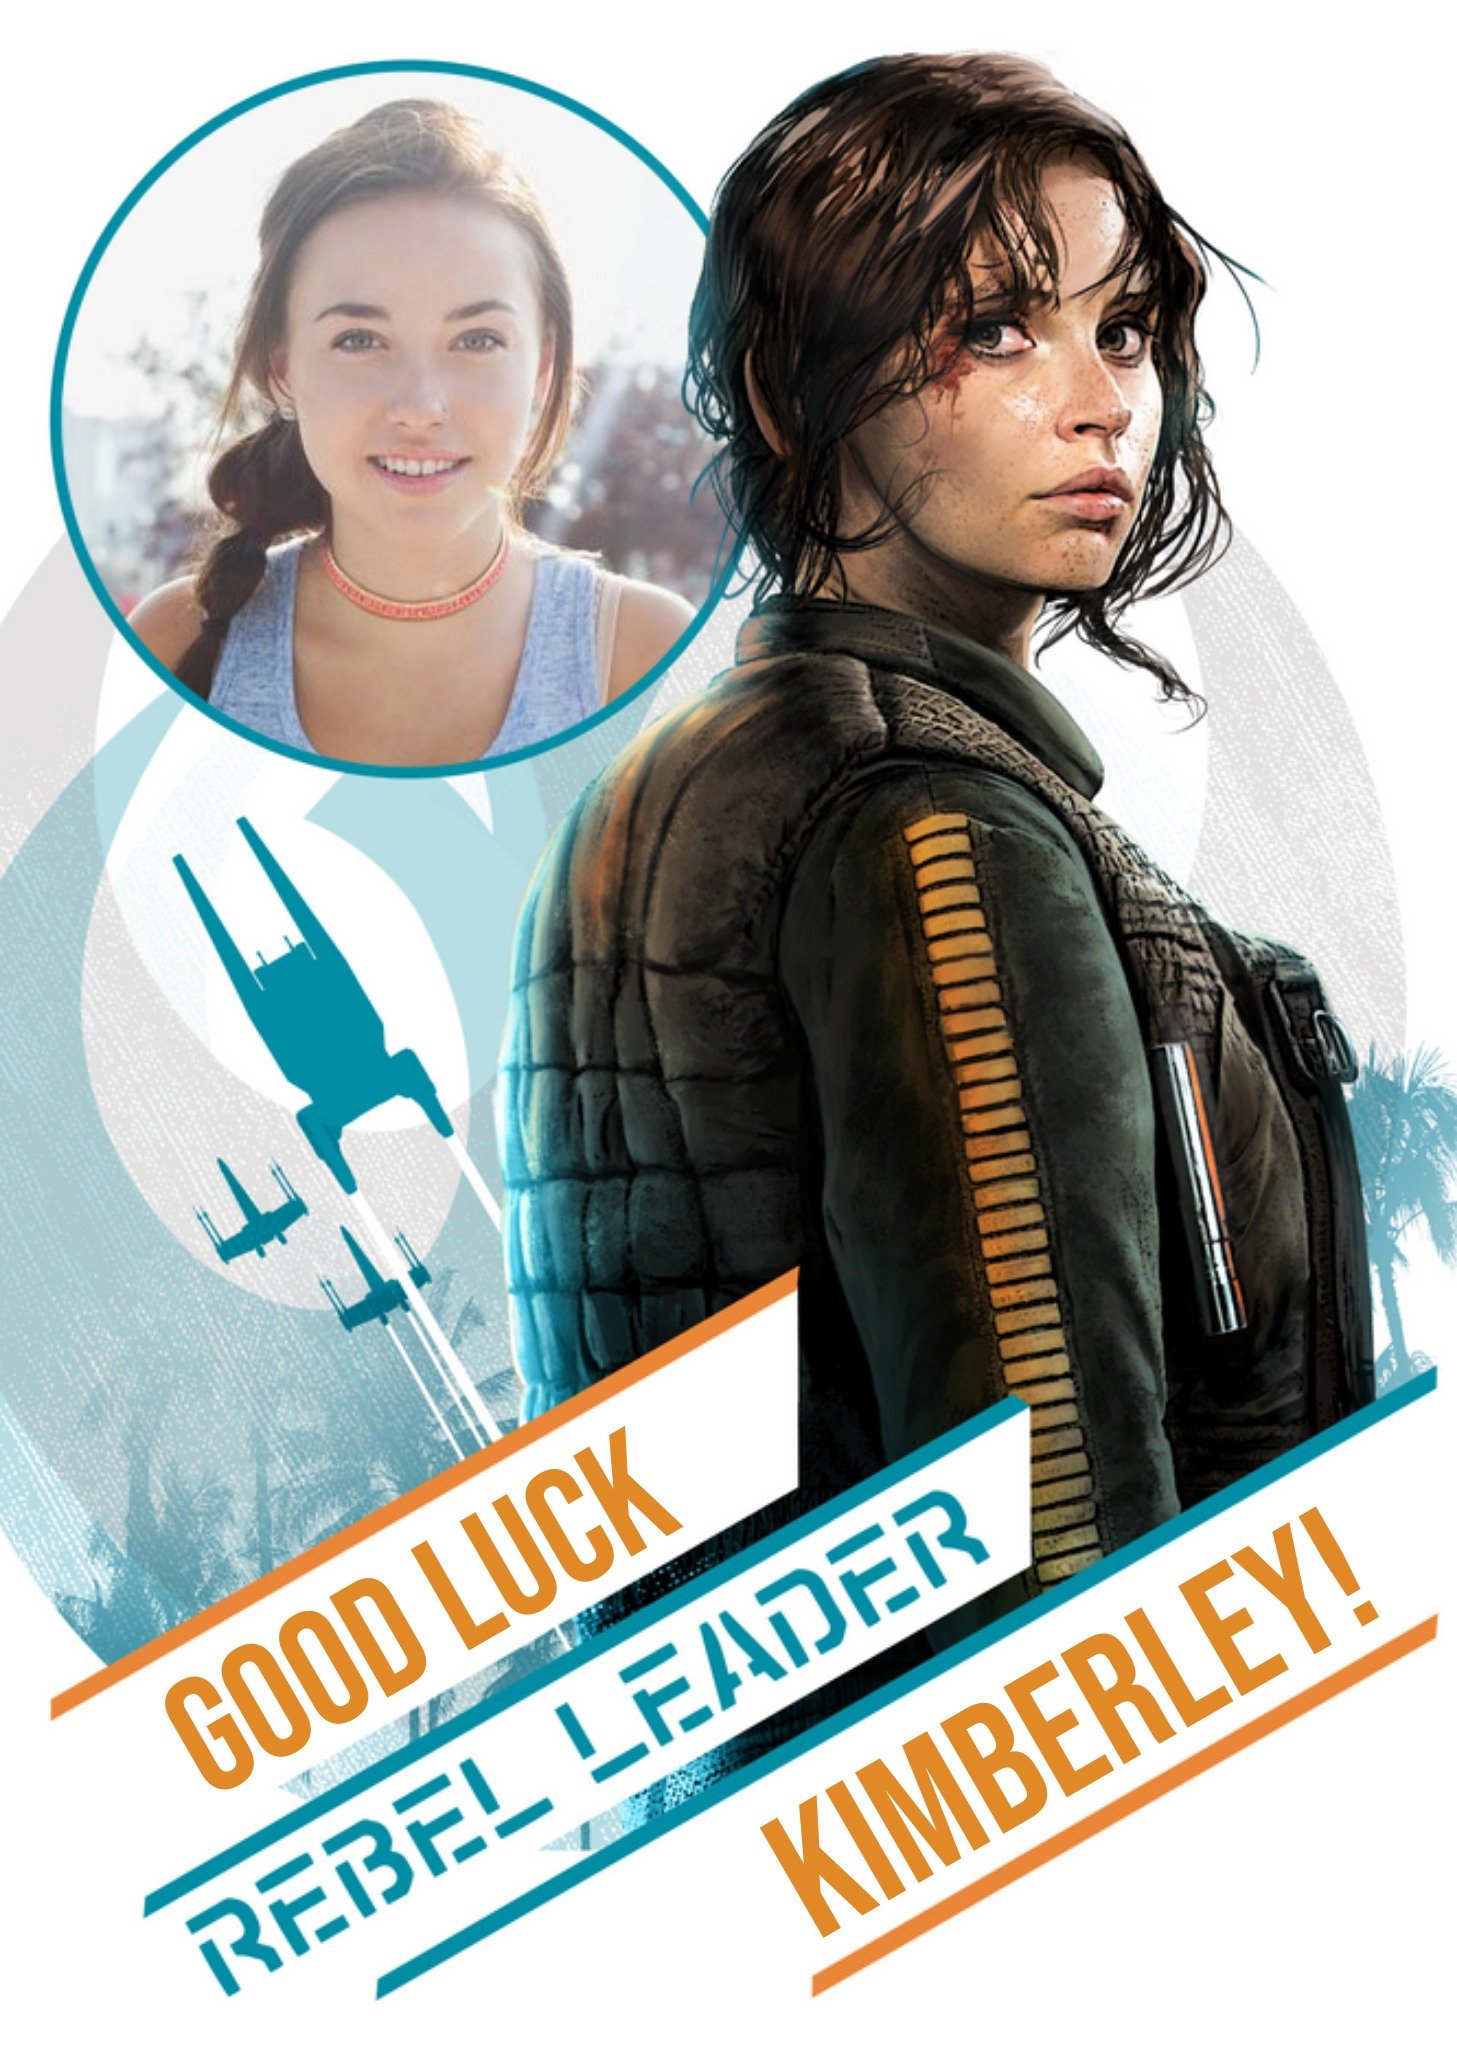 Disney Star Wars Rogue One Rebel Leader Photo Card, Large